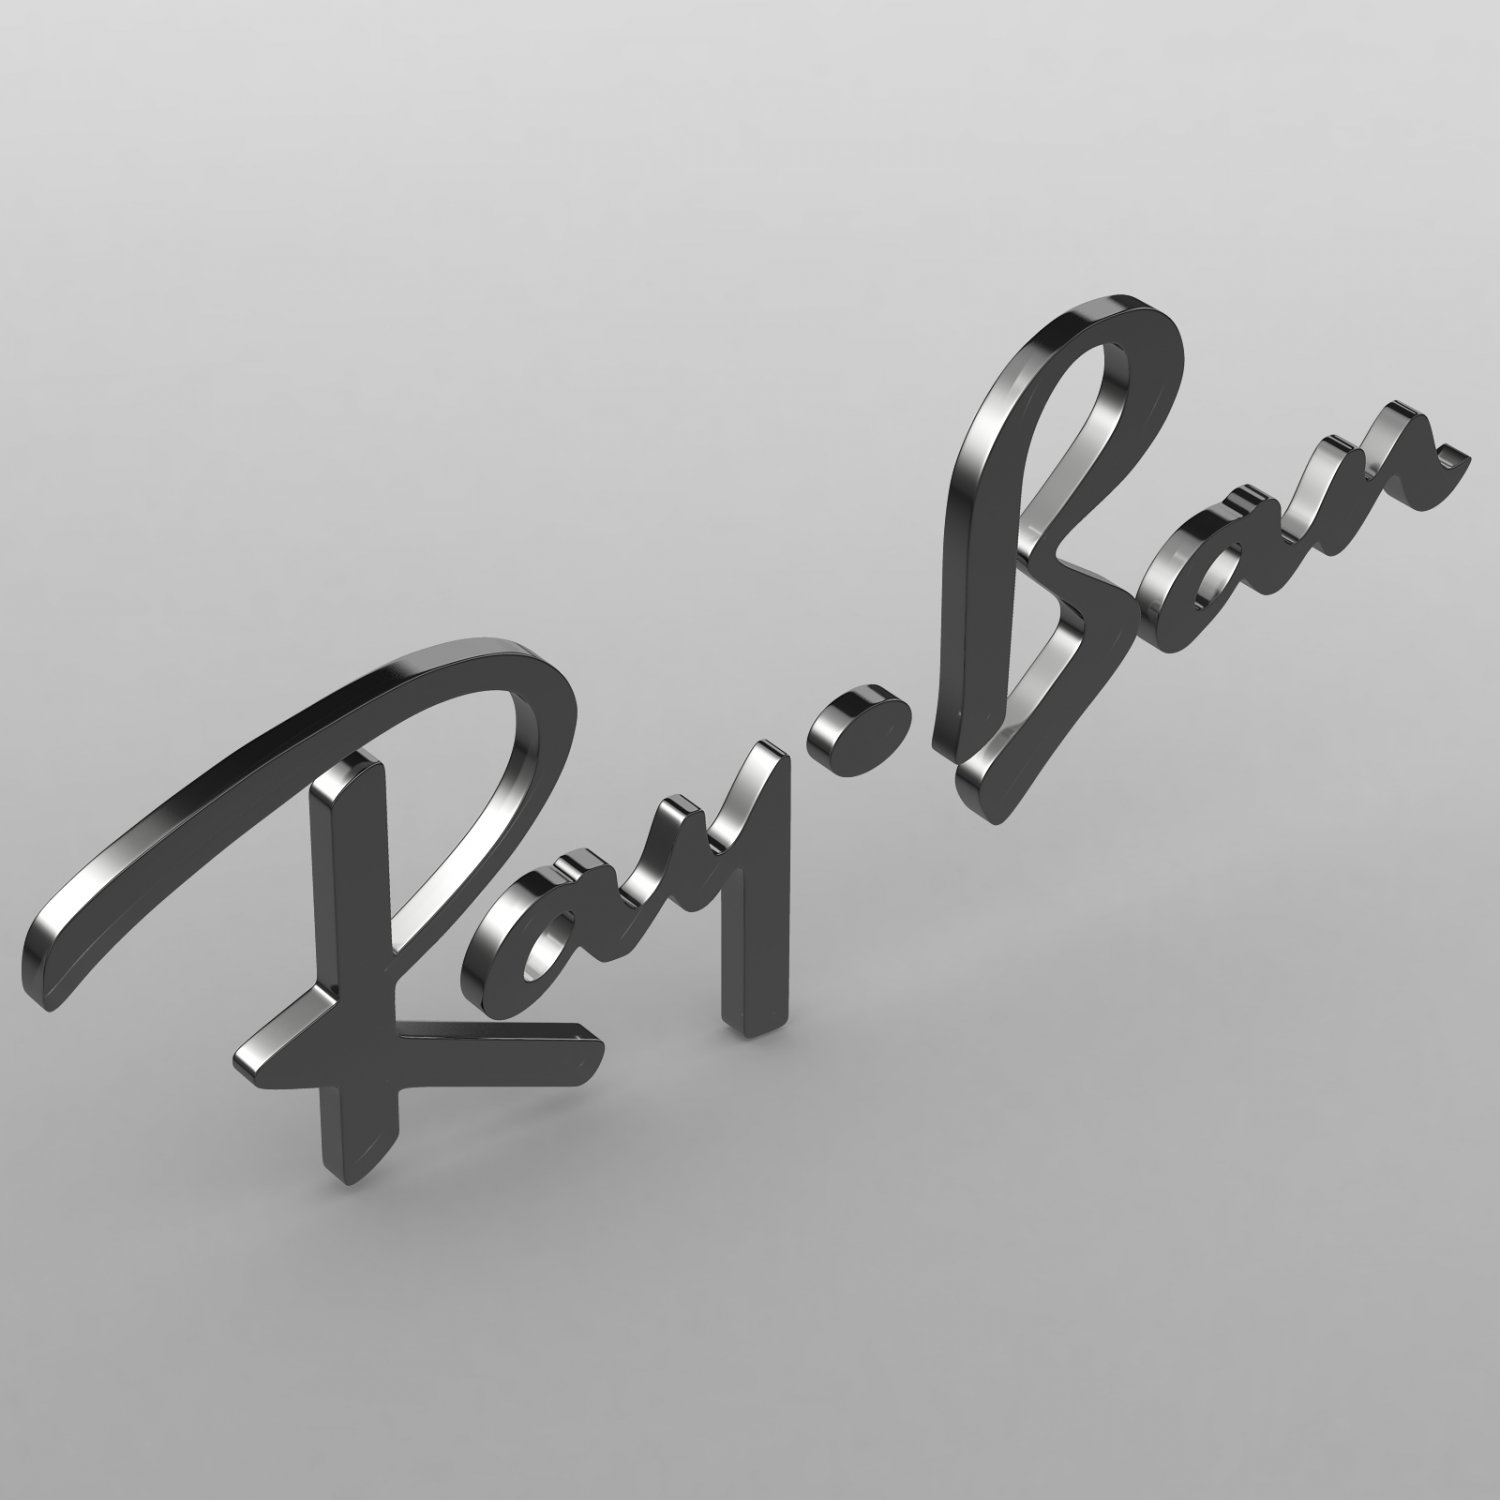 ray ban logo white png